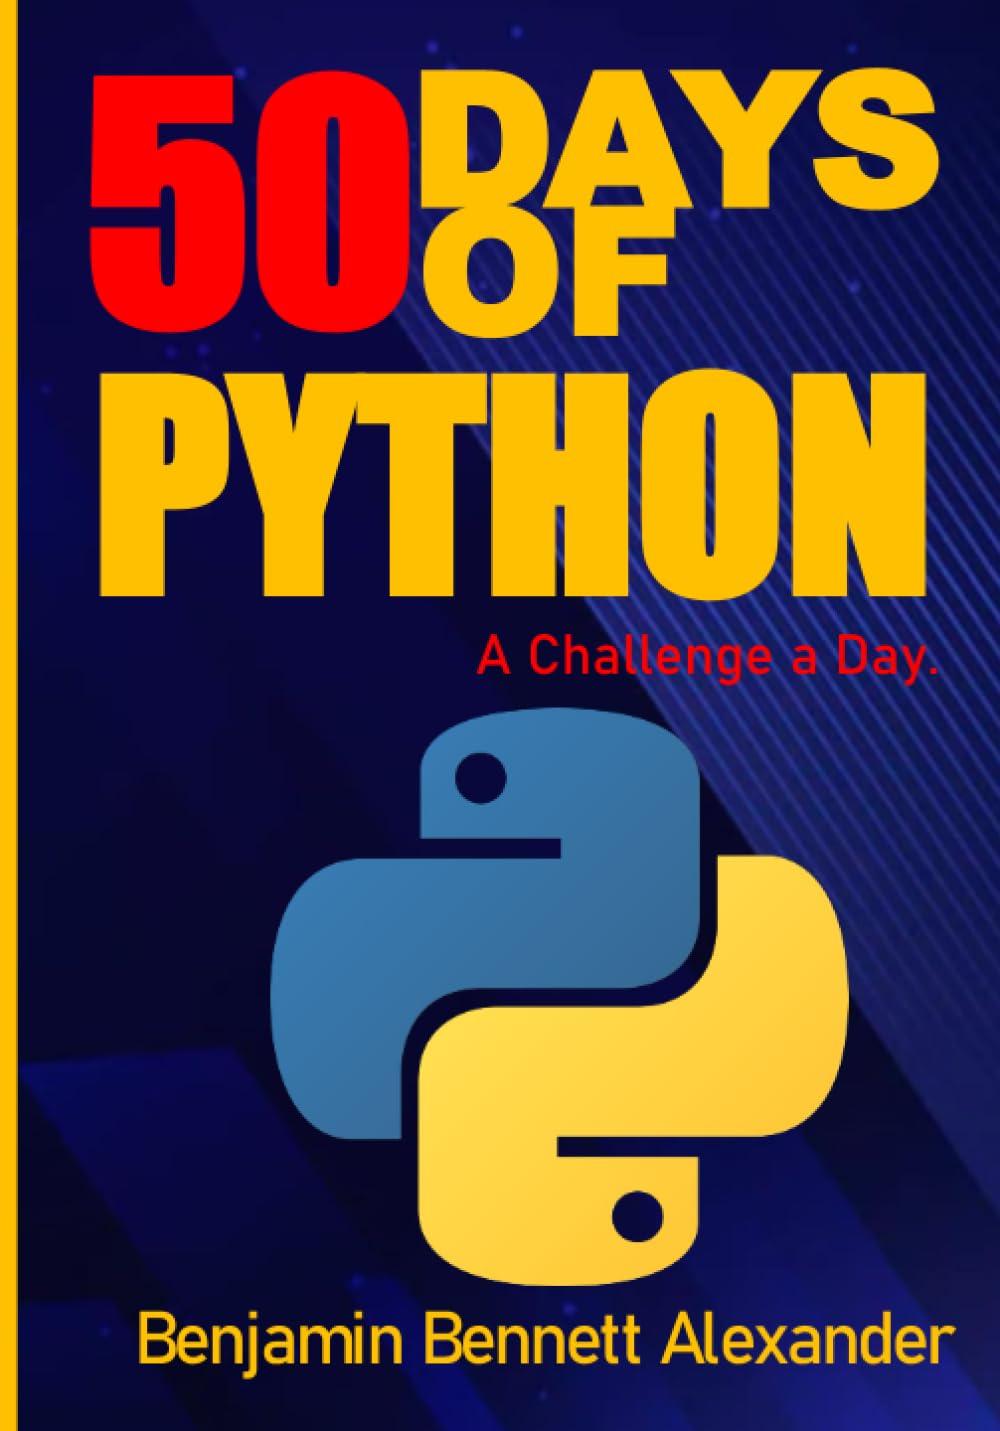 50 days of python  a challenge a day 1st edition benjamin bennett alexander b09tpt5c3k, 979-8425614391